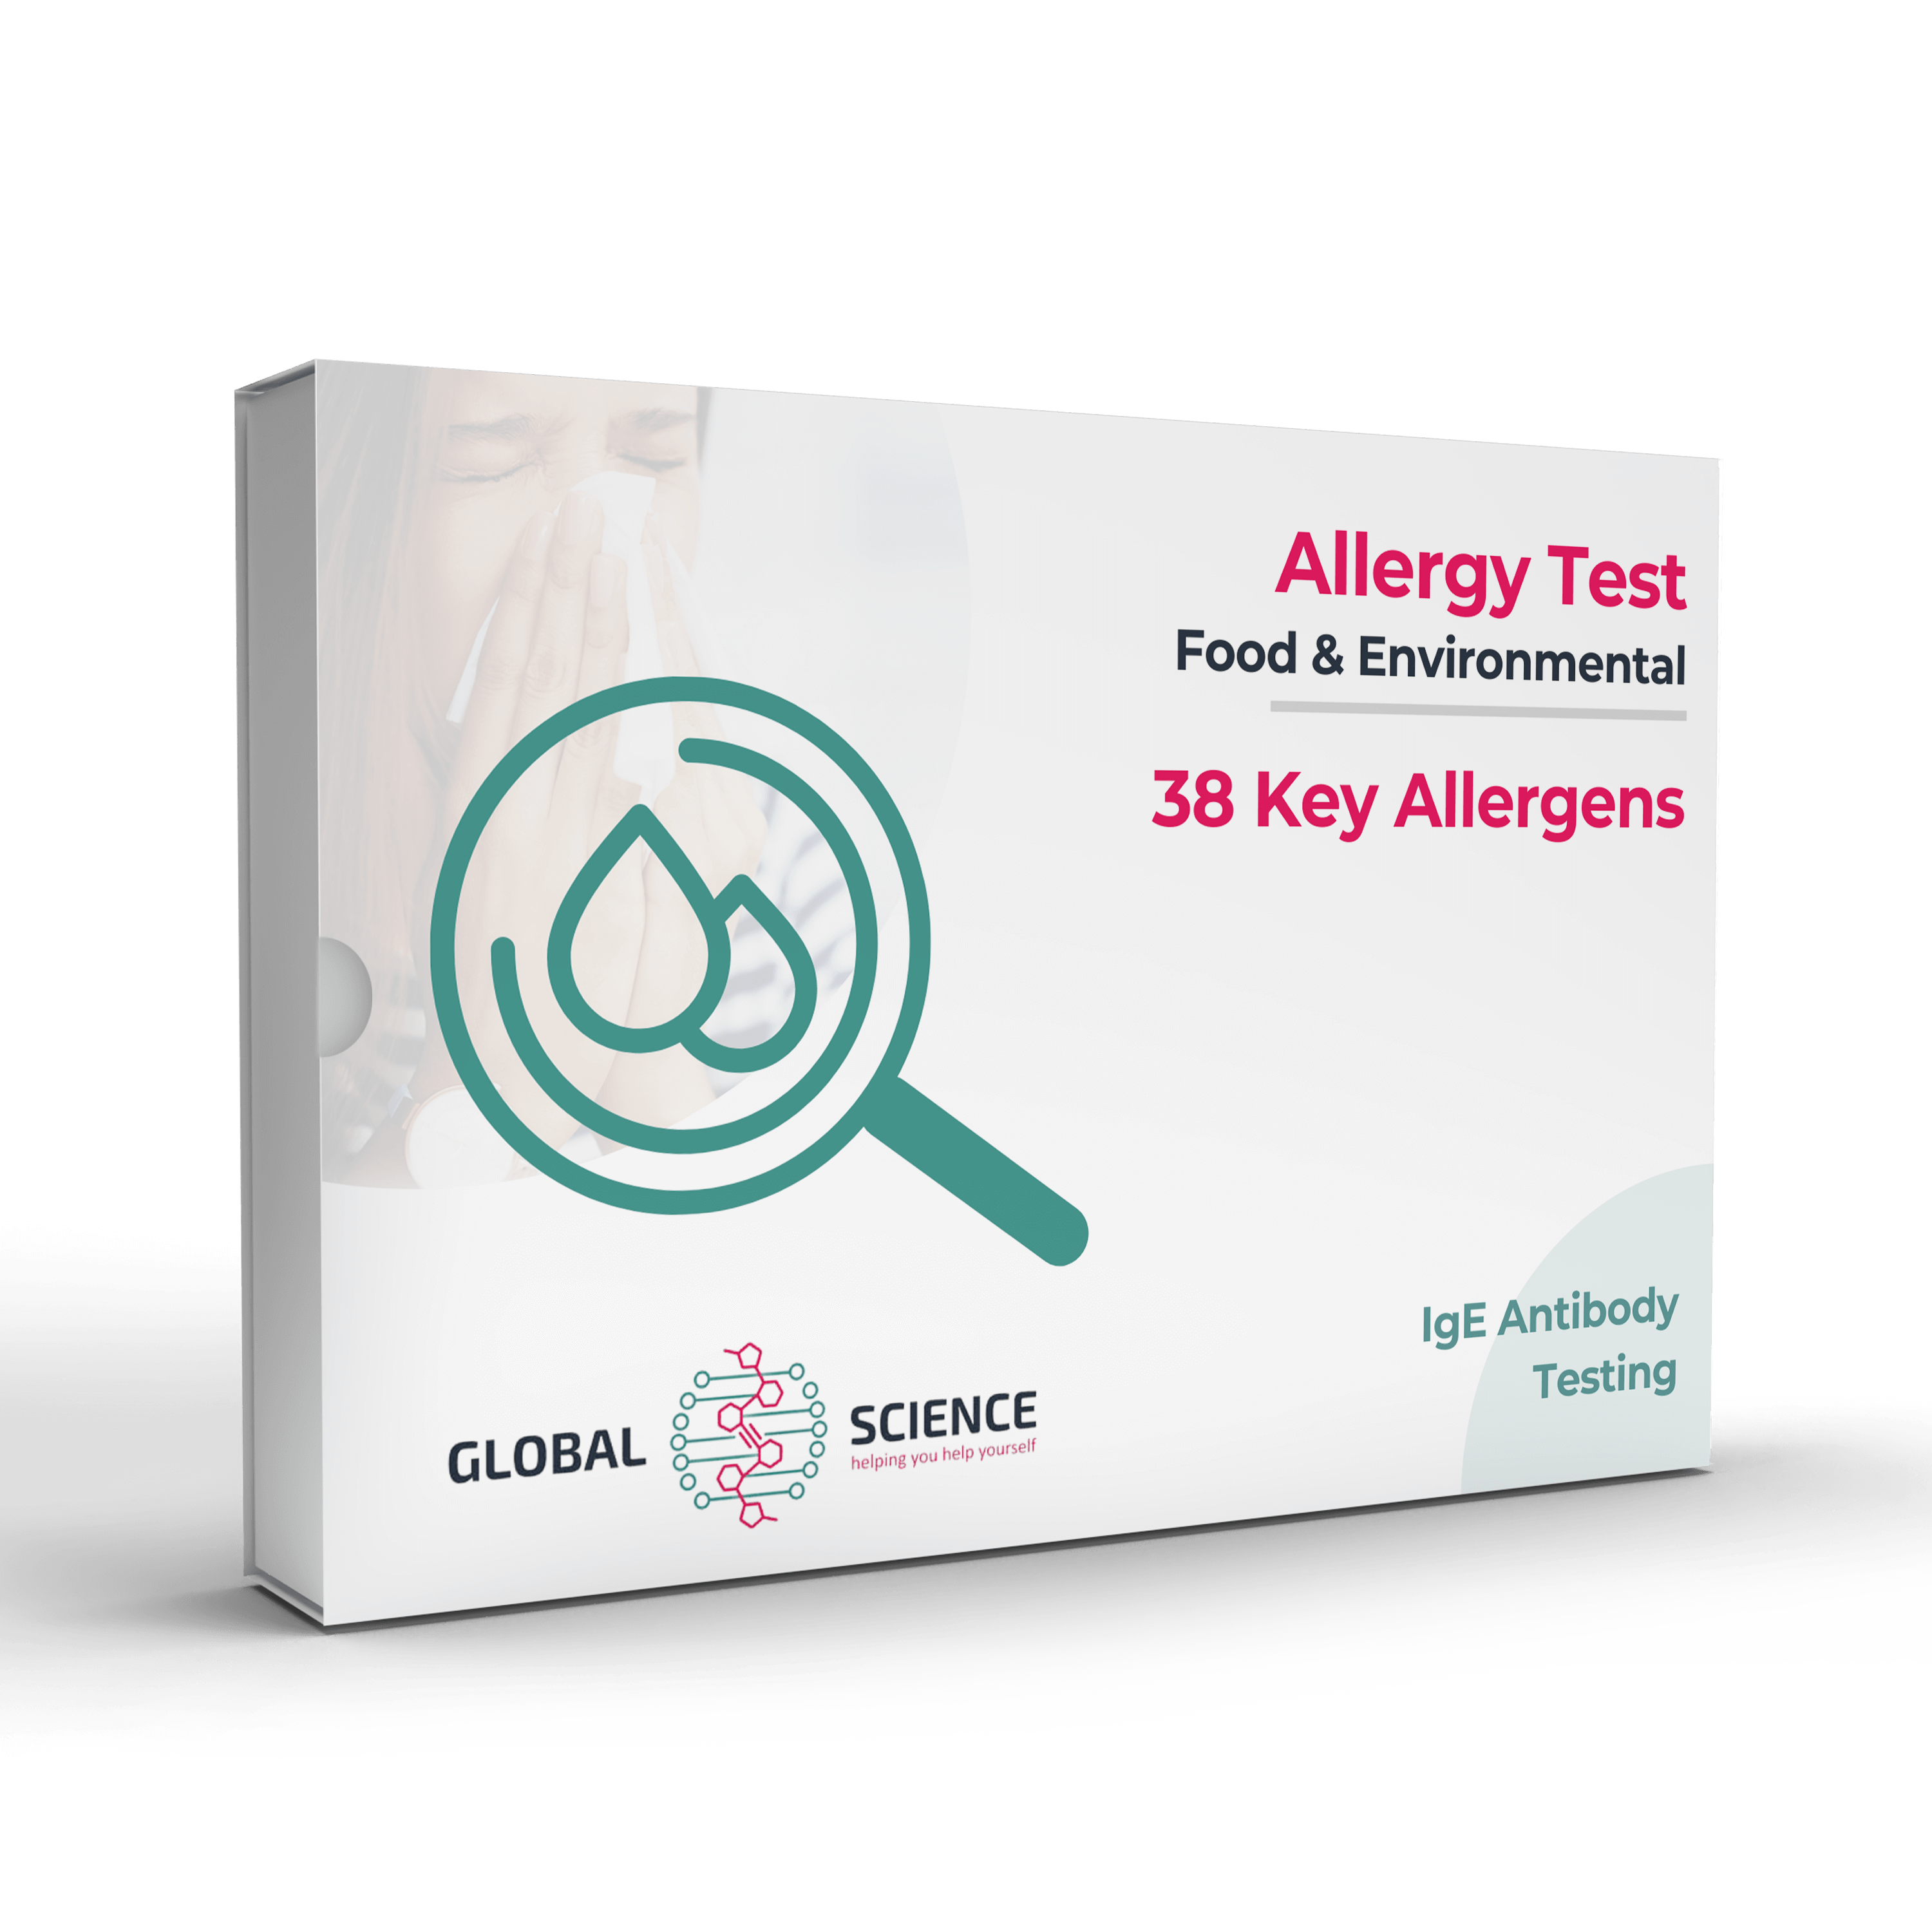 TMI TMA Allergy Test - Elimination diet following an allergy or intolerance test